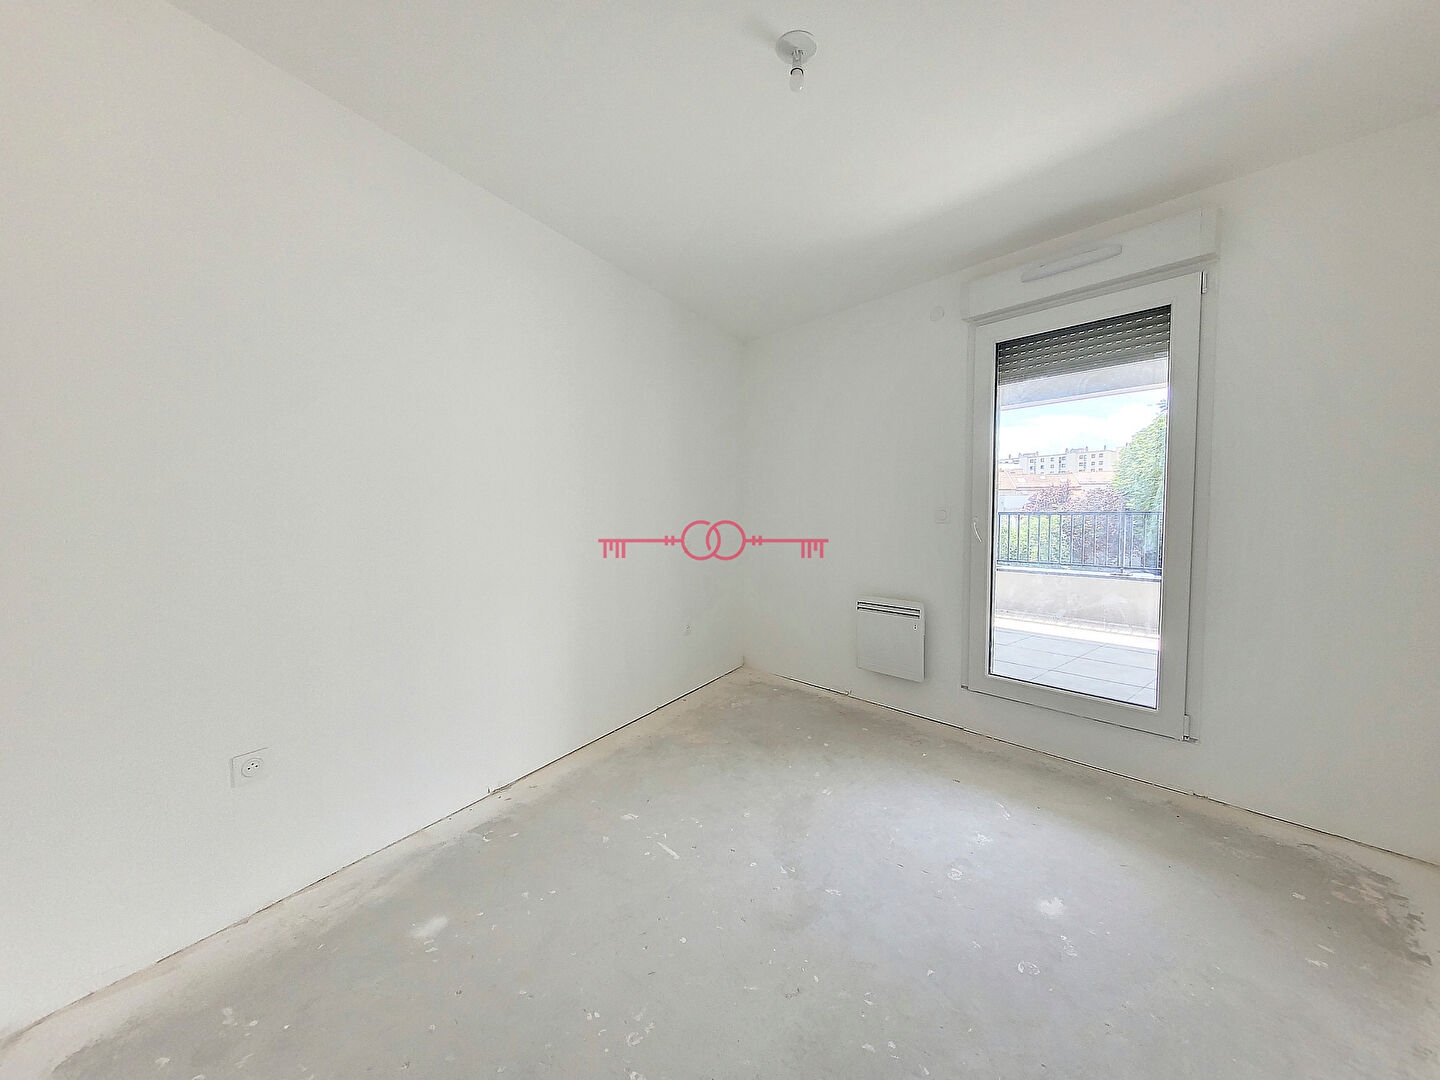 NEUF - Appartement 5 pièce(s) 100.57 m2 - 9